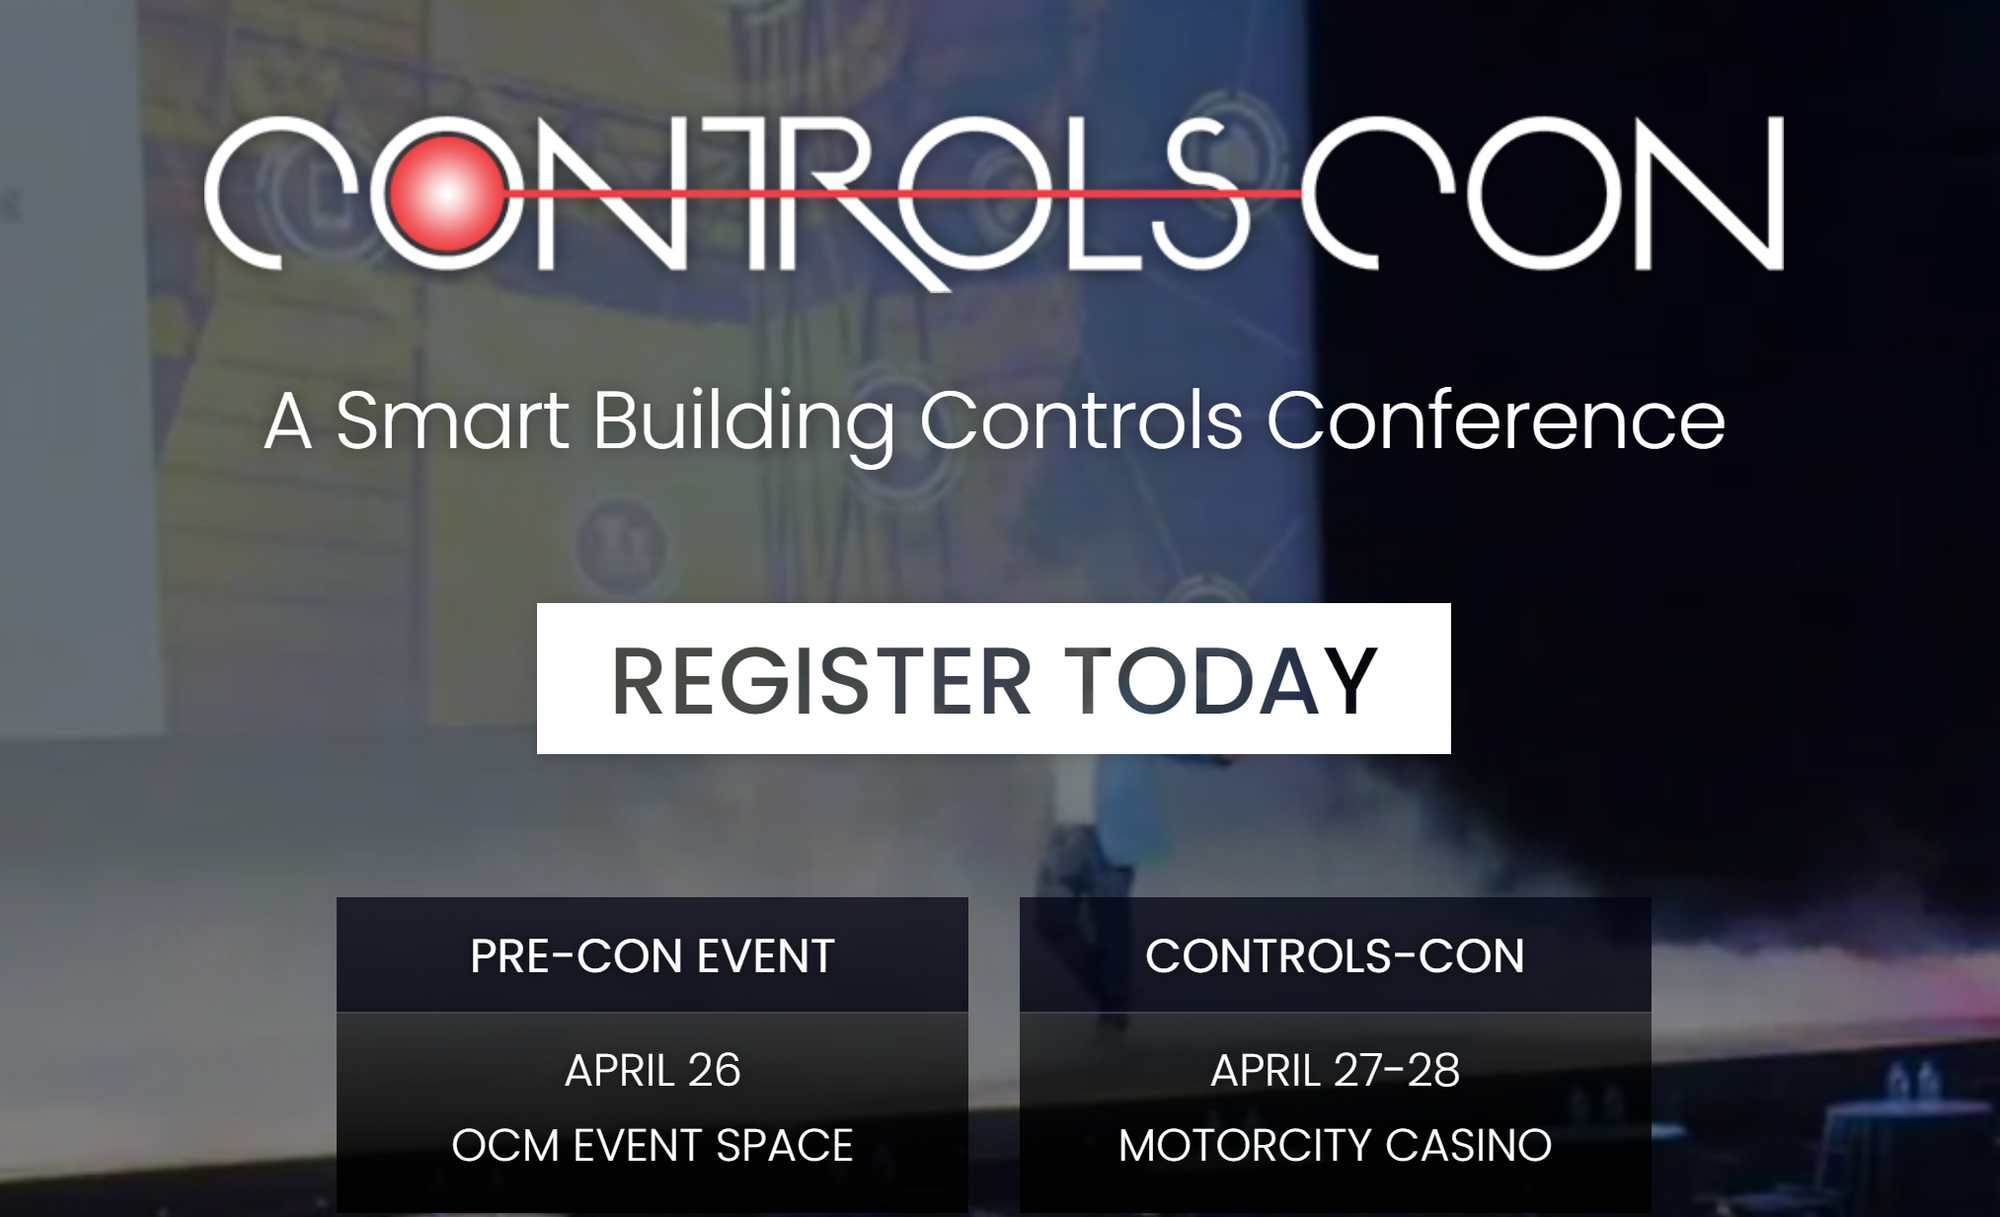 Controls-Con - a Smart Building Controls Conference